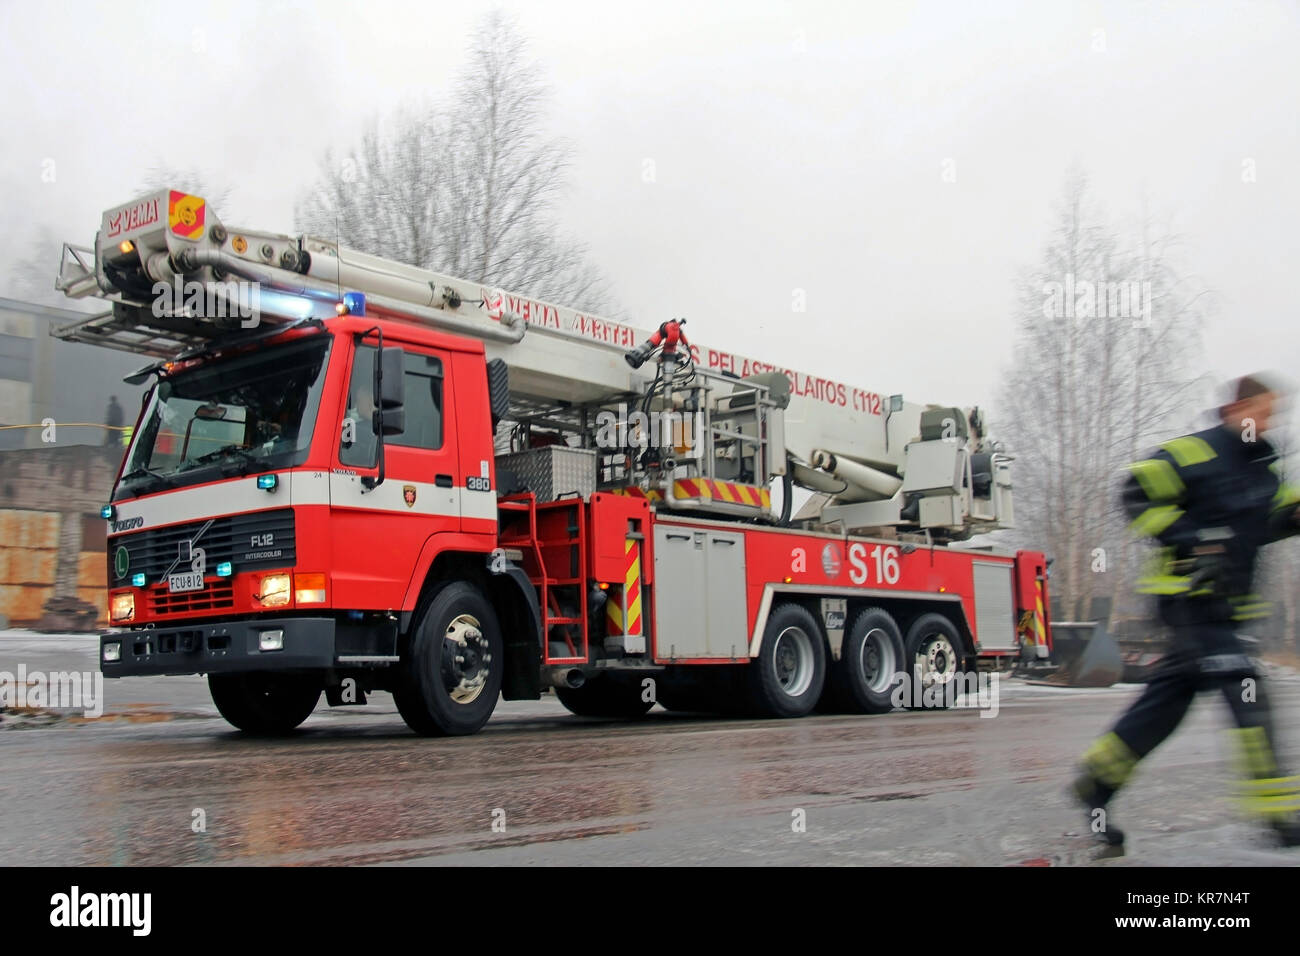 SALO, FINLAND - FEBRUARY 16, 2013: Fire Brigade arrives at the Cement Factory fire scene in Salo, Finland. Stock Photo